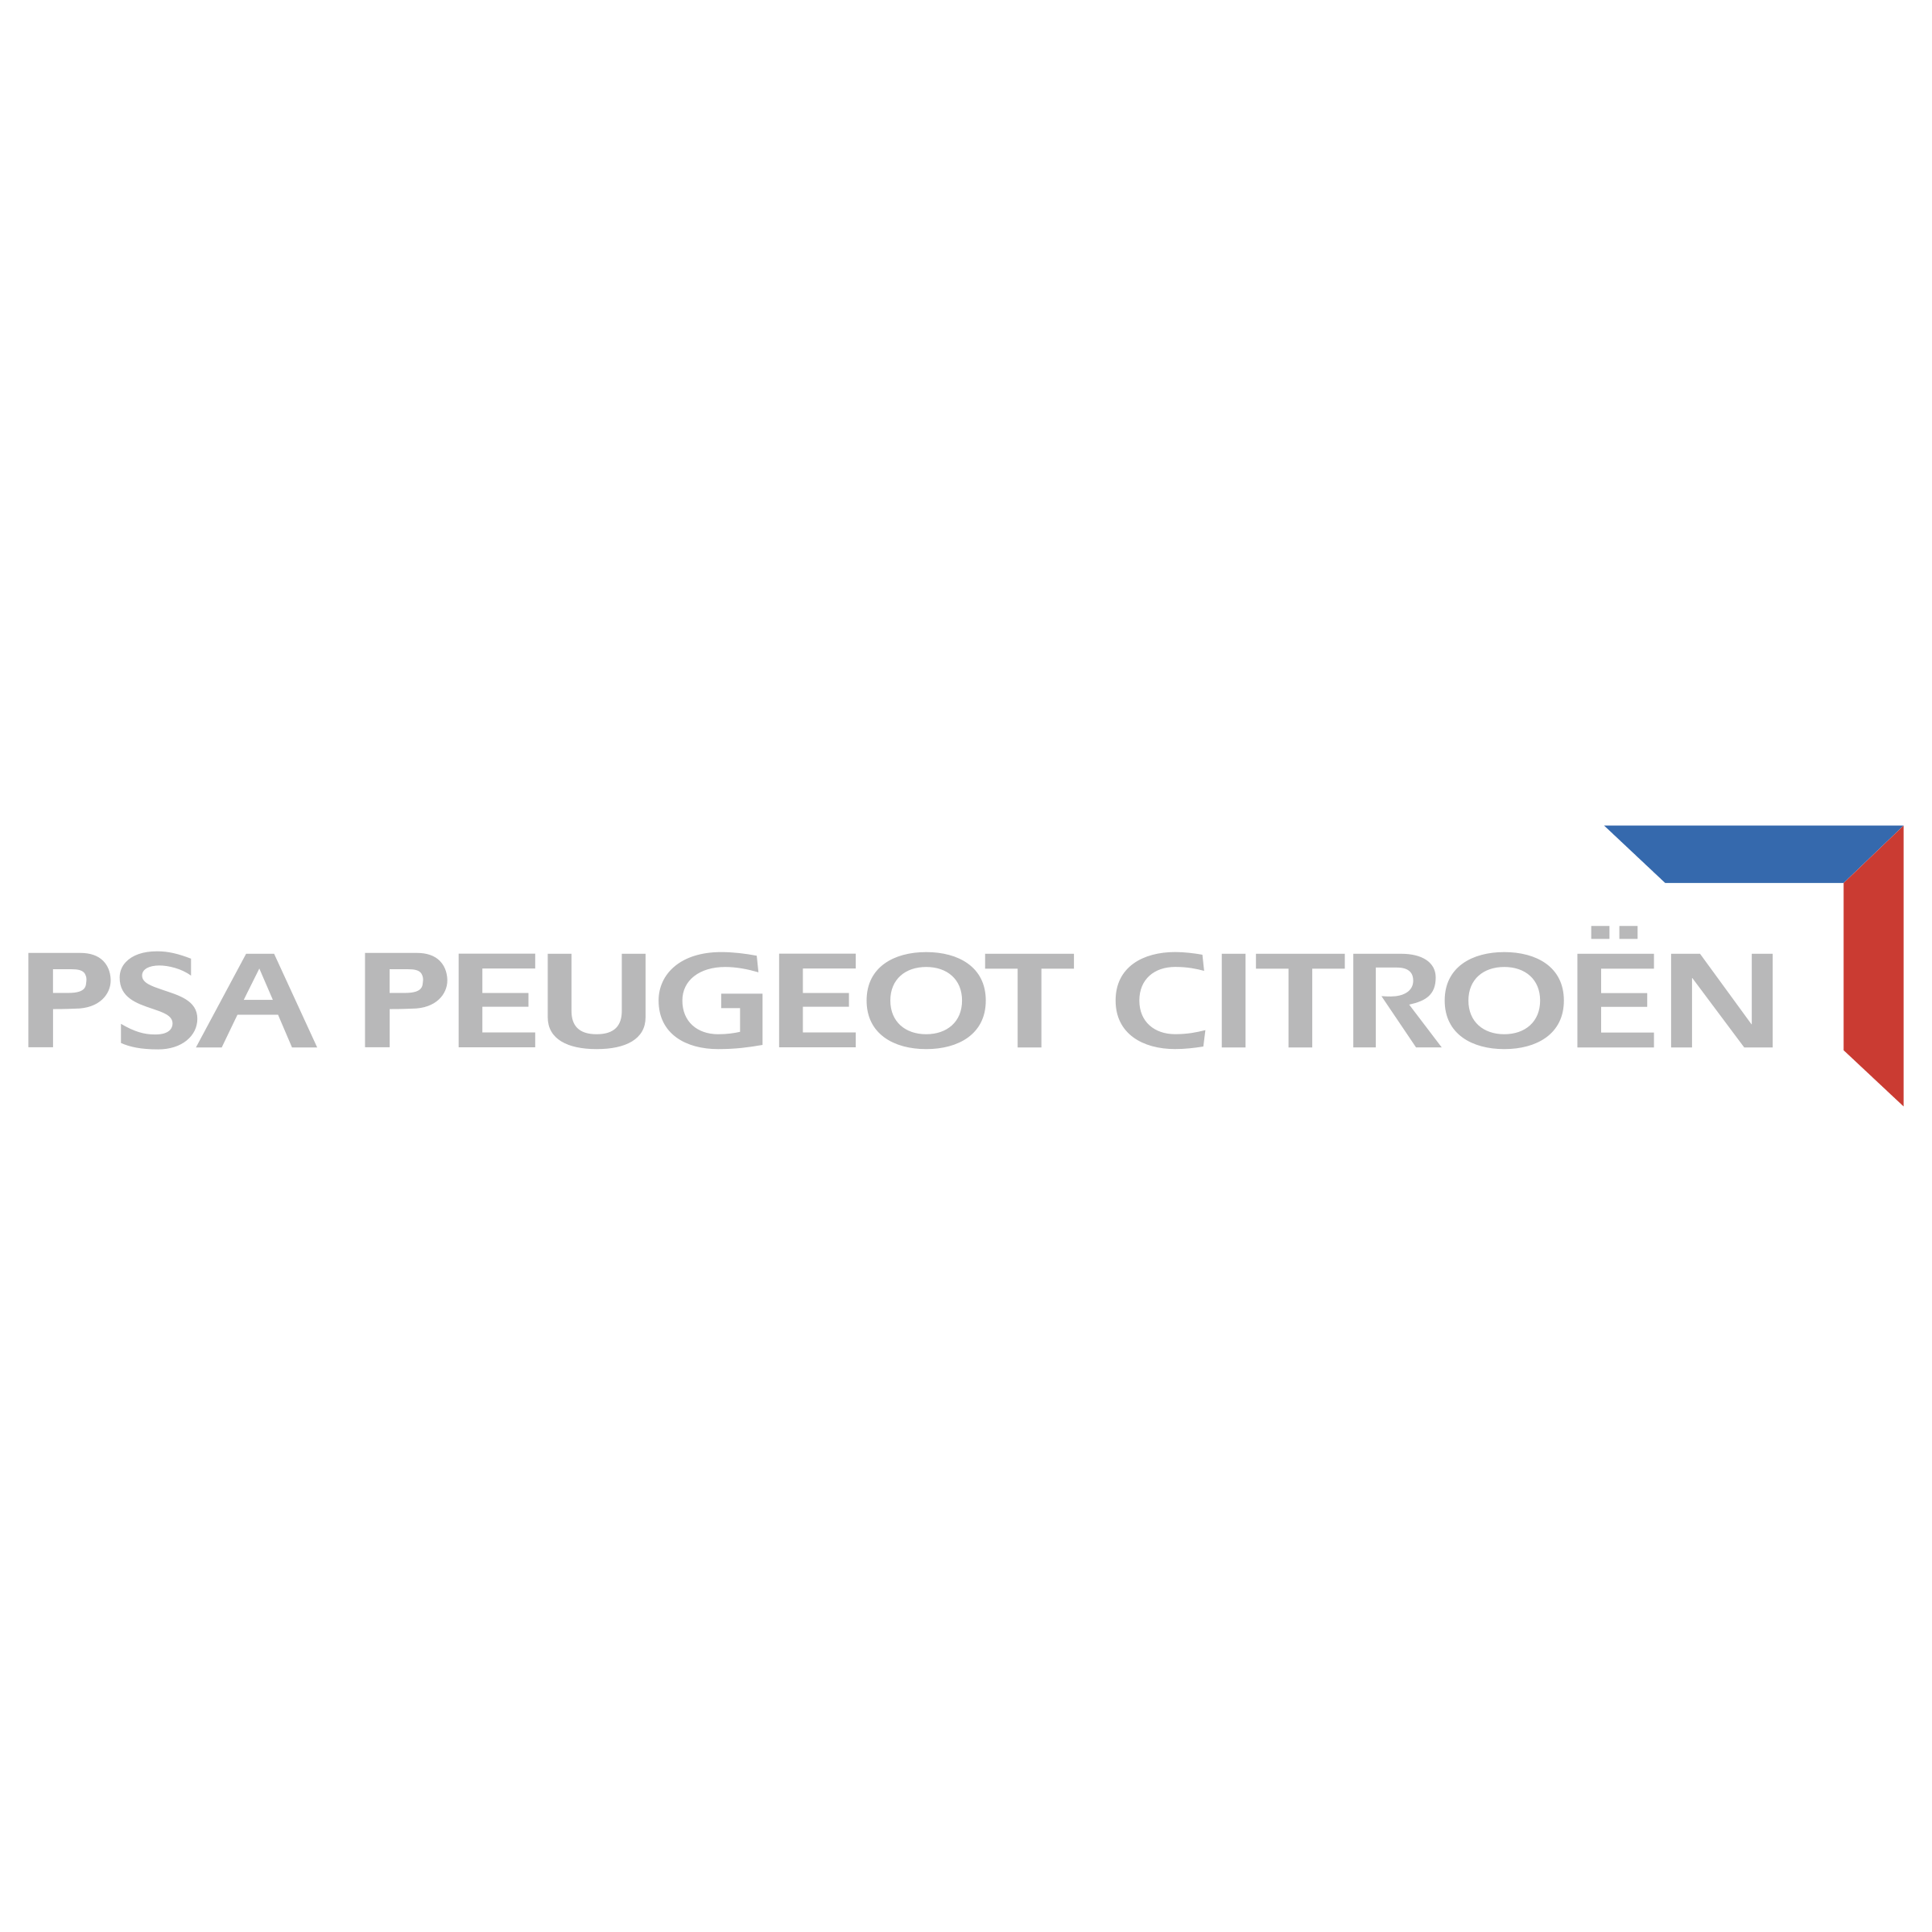 PSA Logo - PSA Peugeot Citroen Logo PNG Transparent & SVG Vector - Freebie Supply